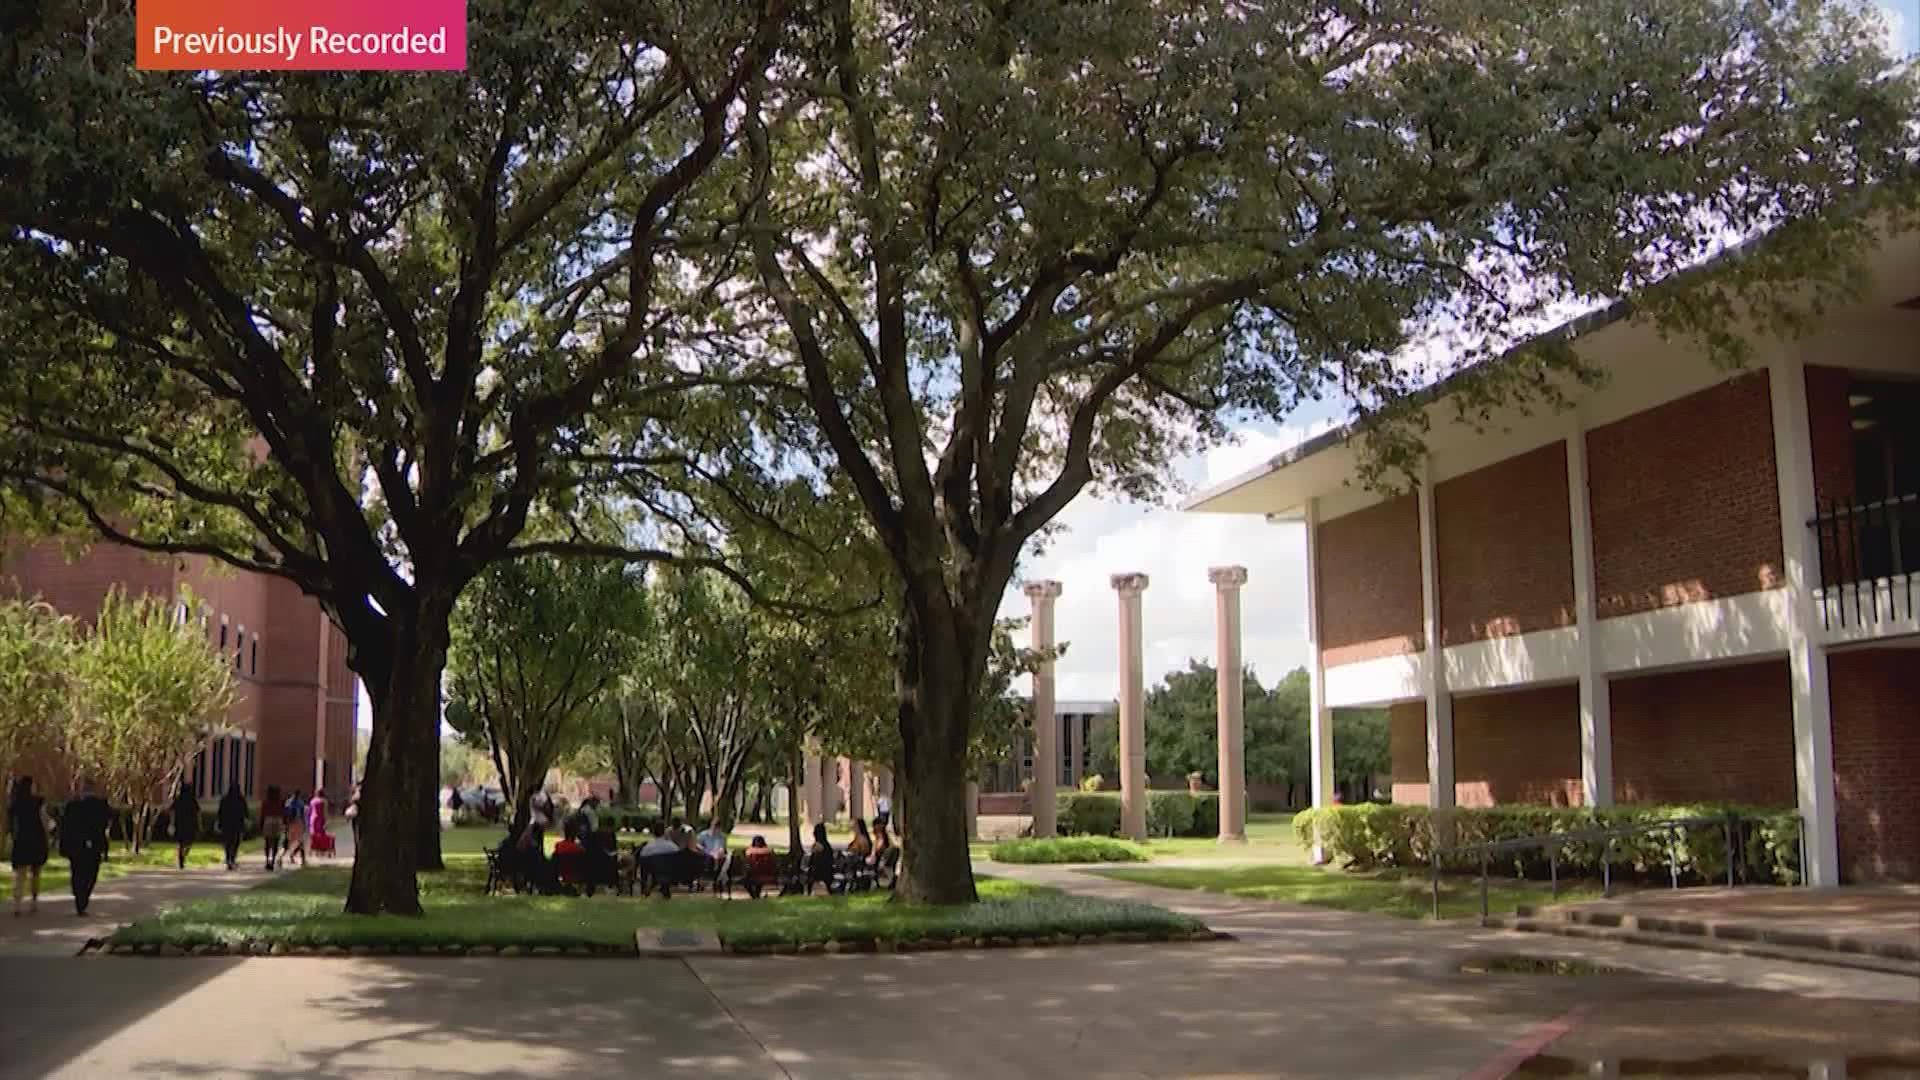 The university will now go by Houston Christian University, President Robert B. Sloan announced Wednesday.